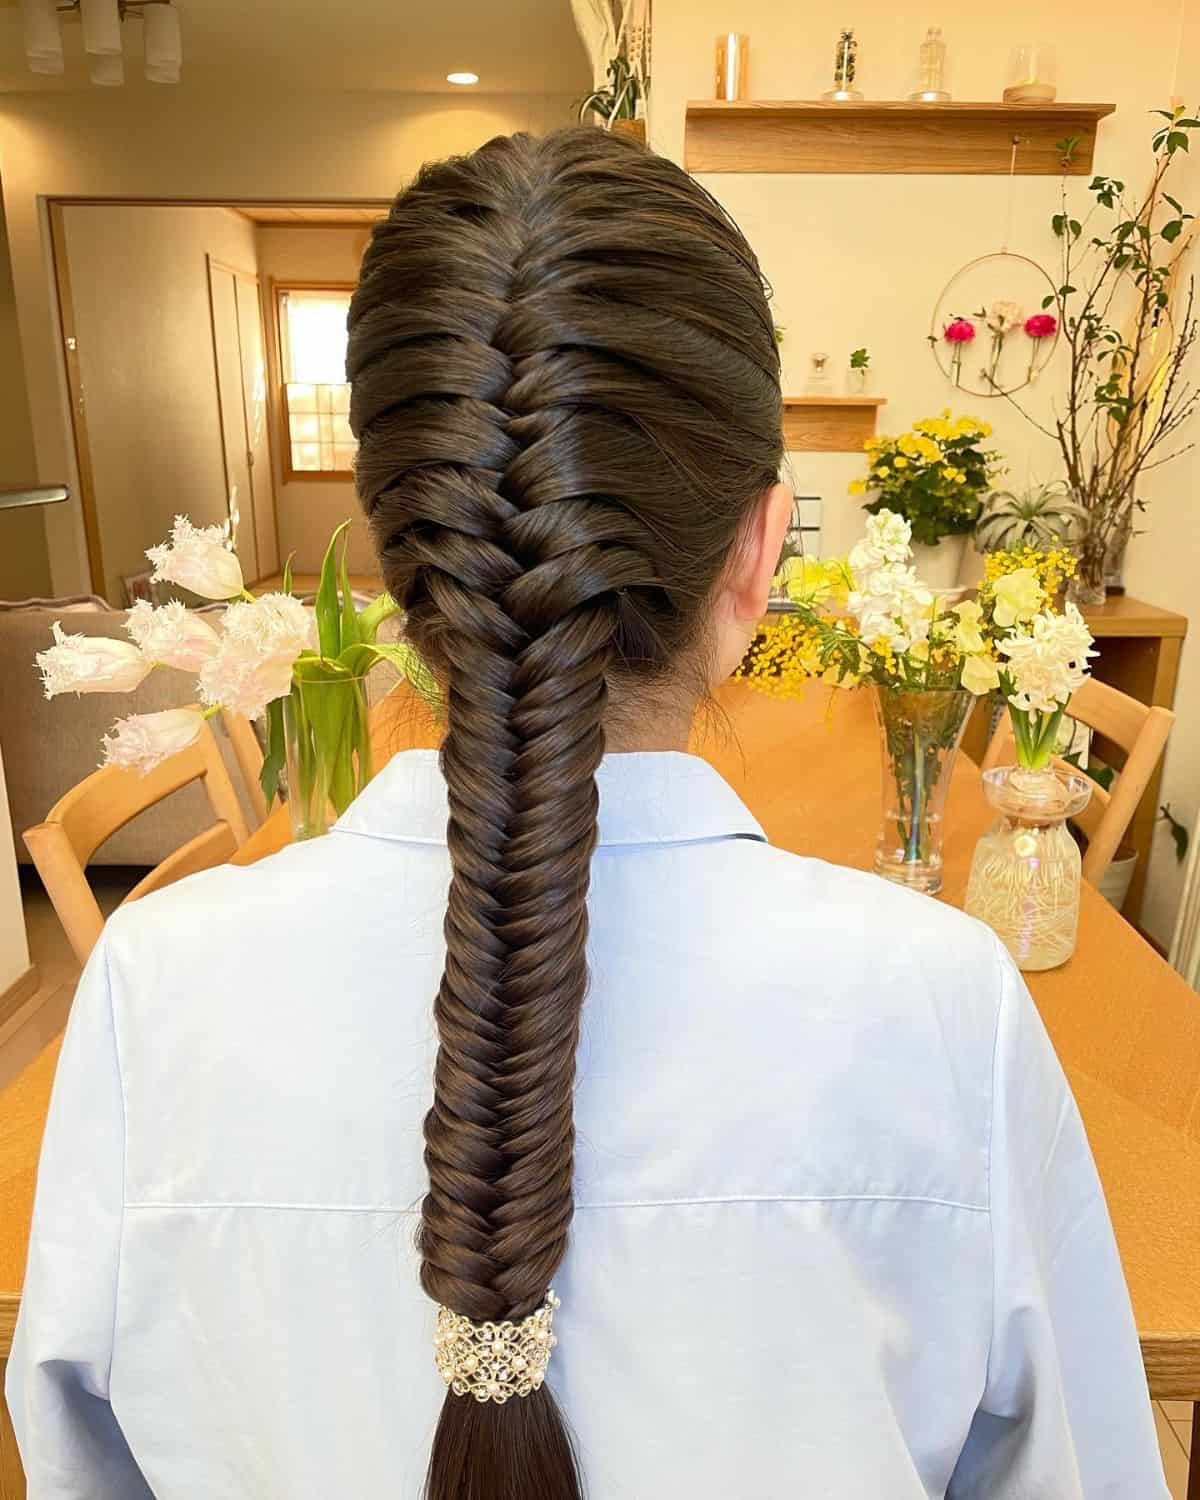 Fishtail Braid woman's hairstyle.